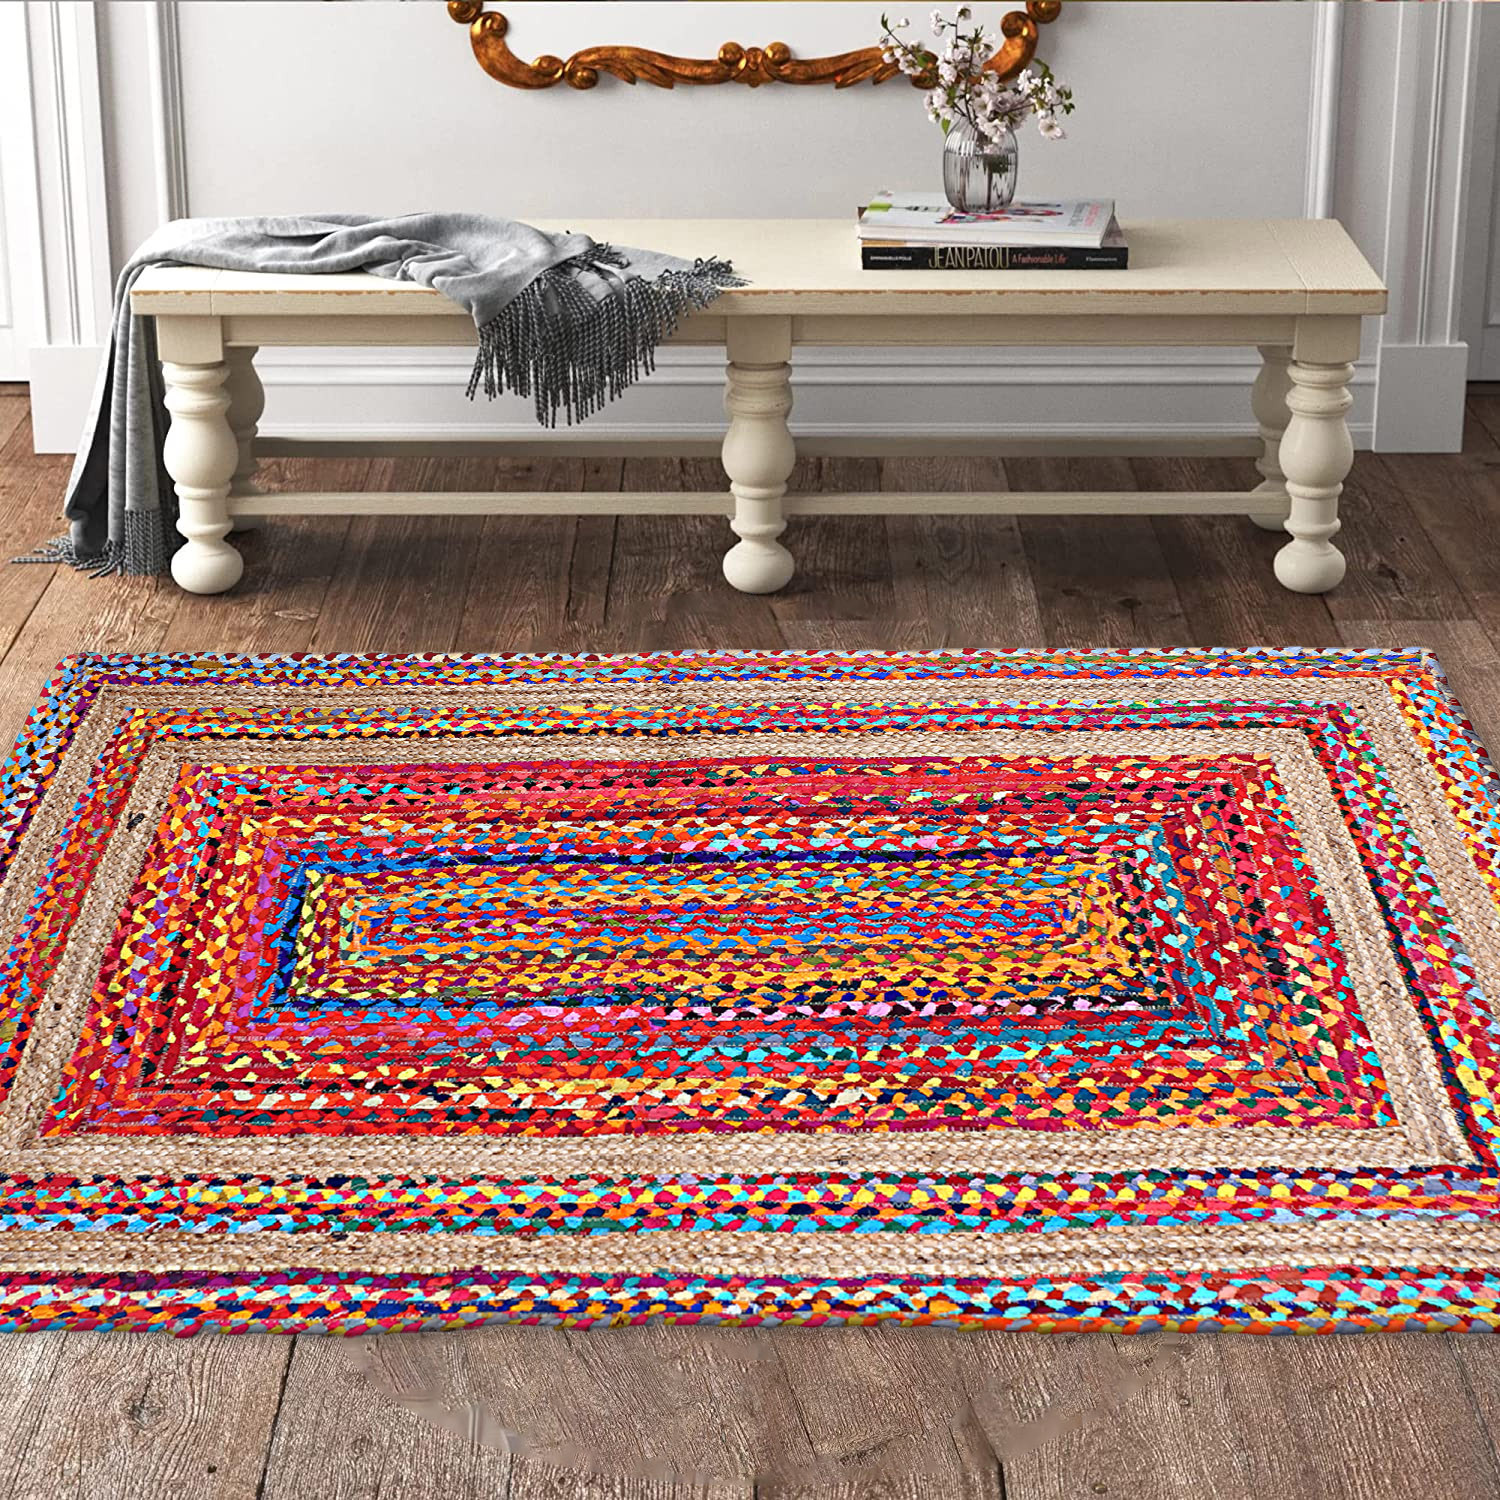 Kuber Industries Hand Woven Carpet|Jute Rectangular Shape Centre Table Dhurrie|Striped Floor Door Mat For Furnish Living Room,Bedroom,5x3 Feet,(Multicolor)